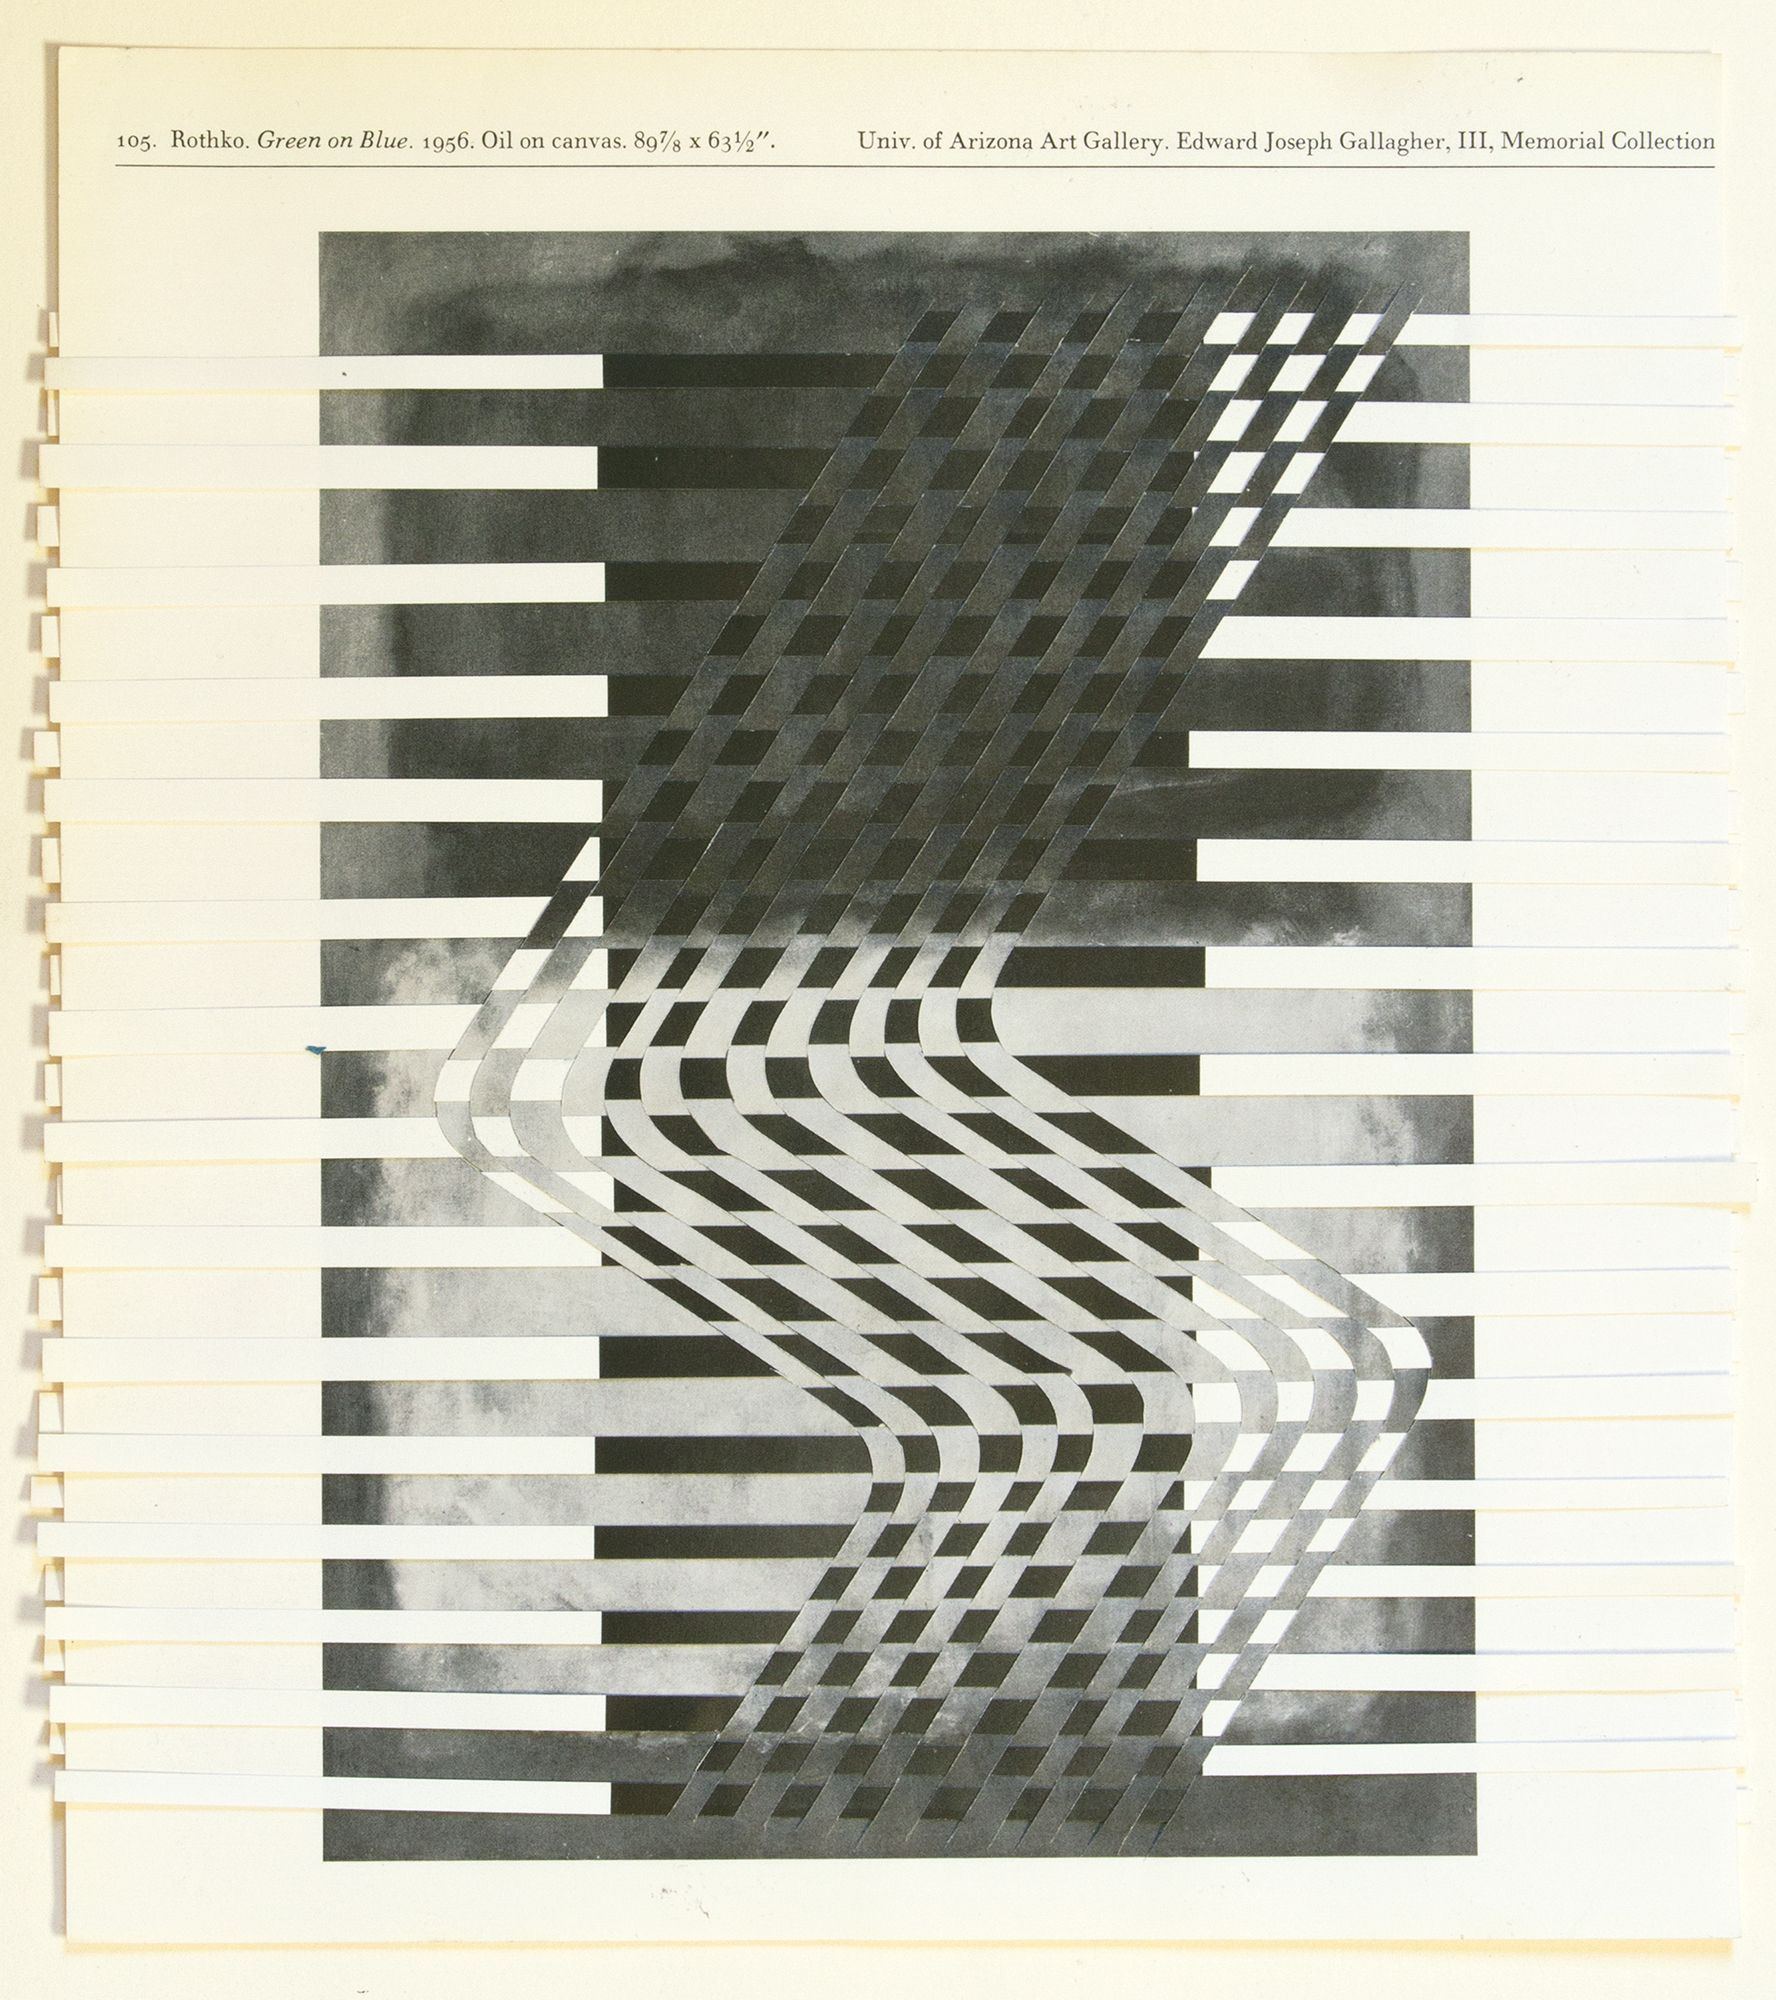 rothkoreinhardt (black and white), 2014, paper weaving, 8 x 9